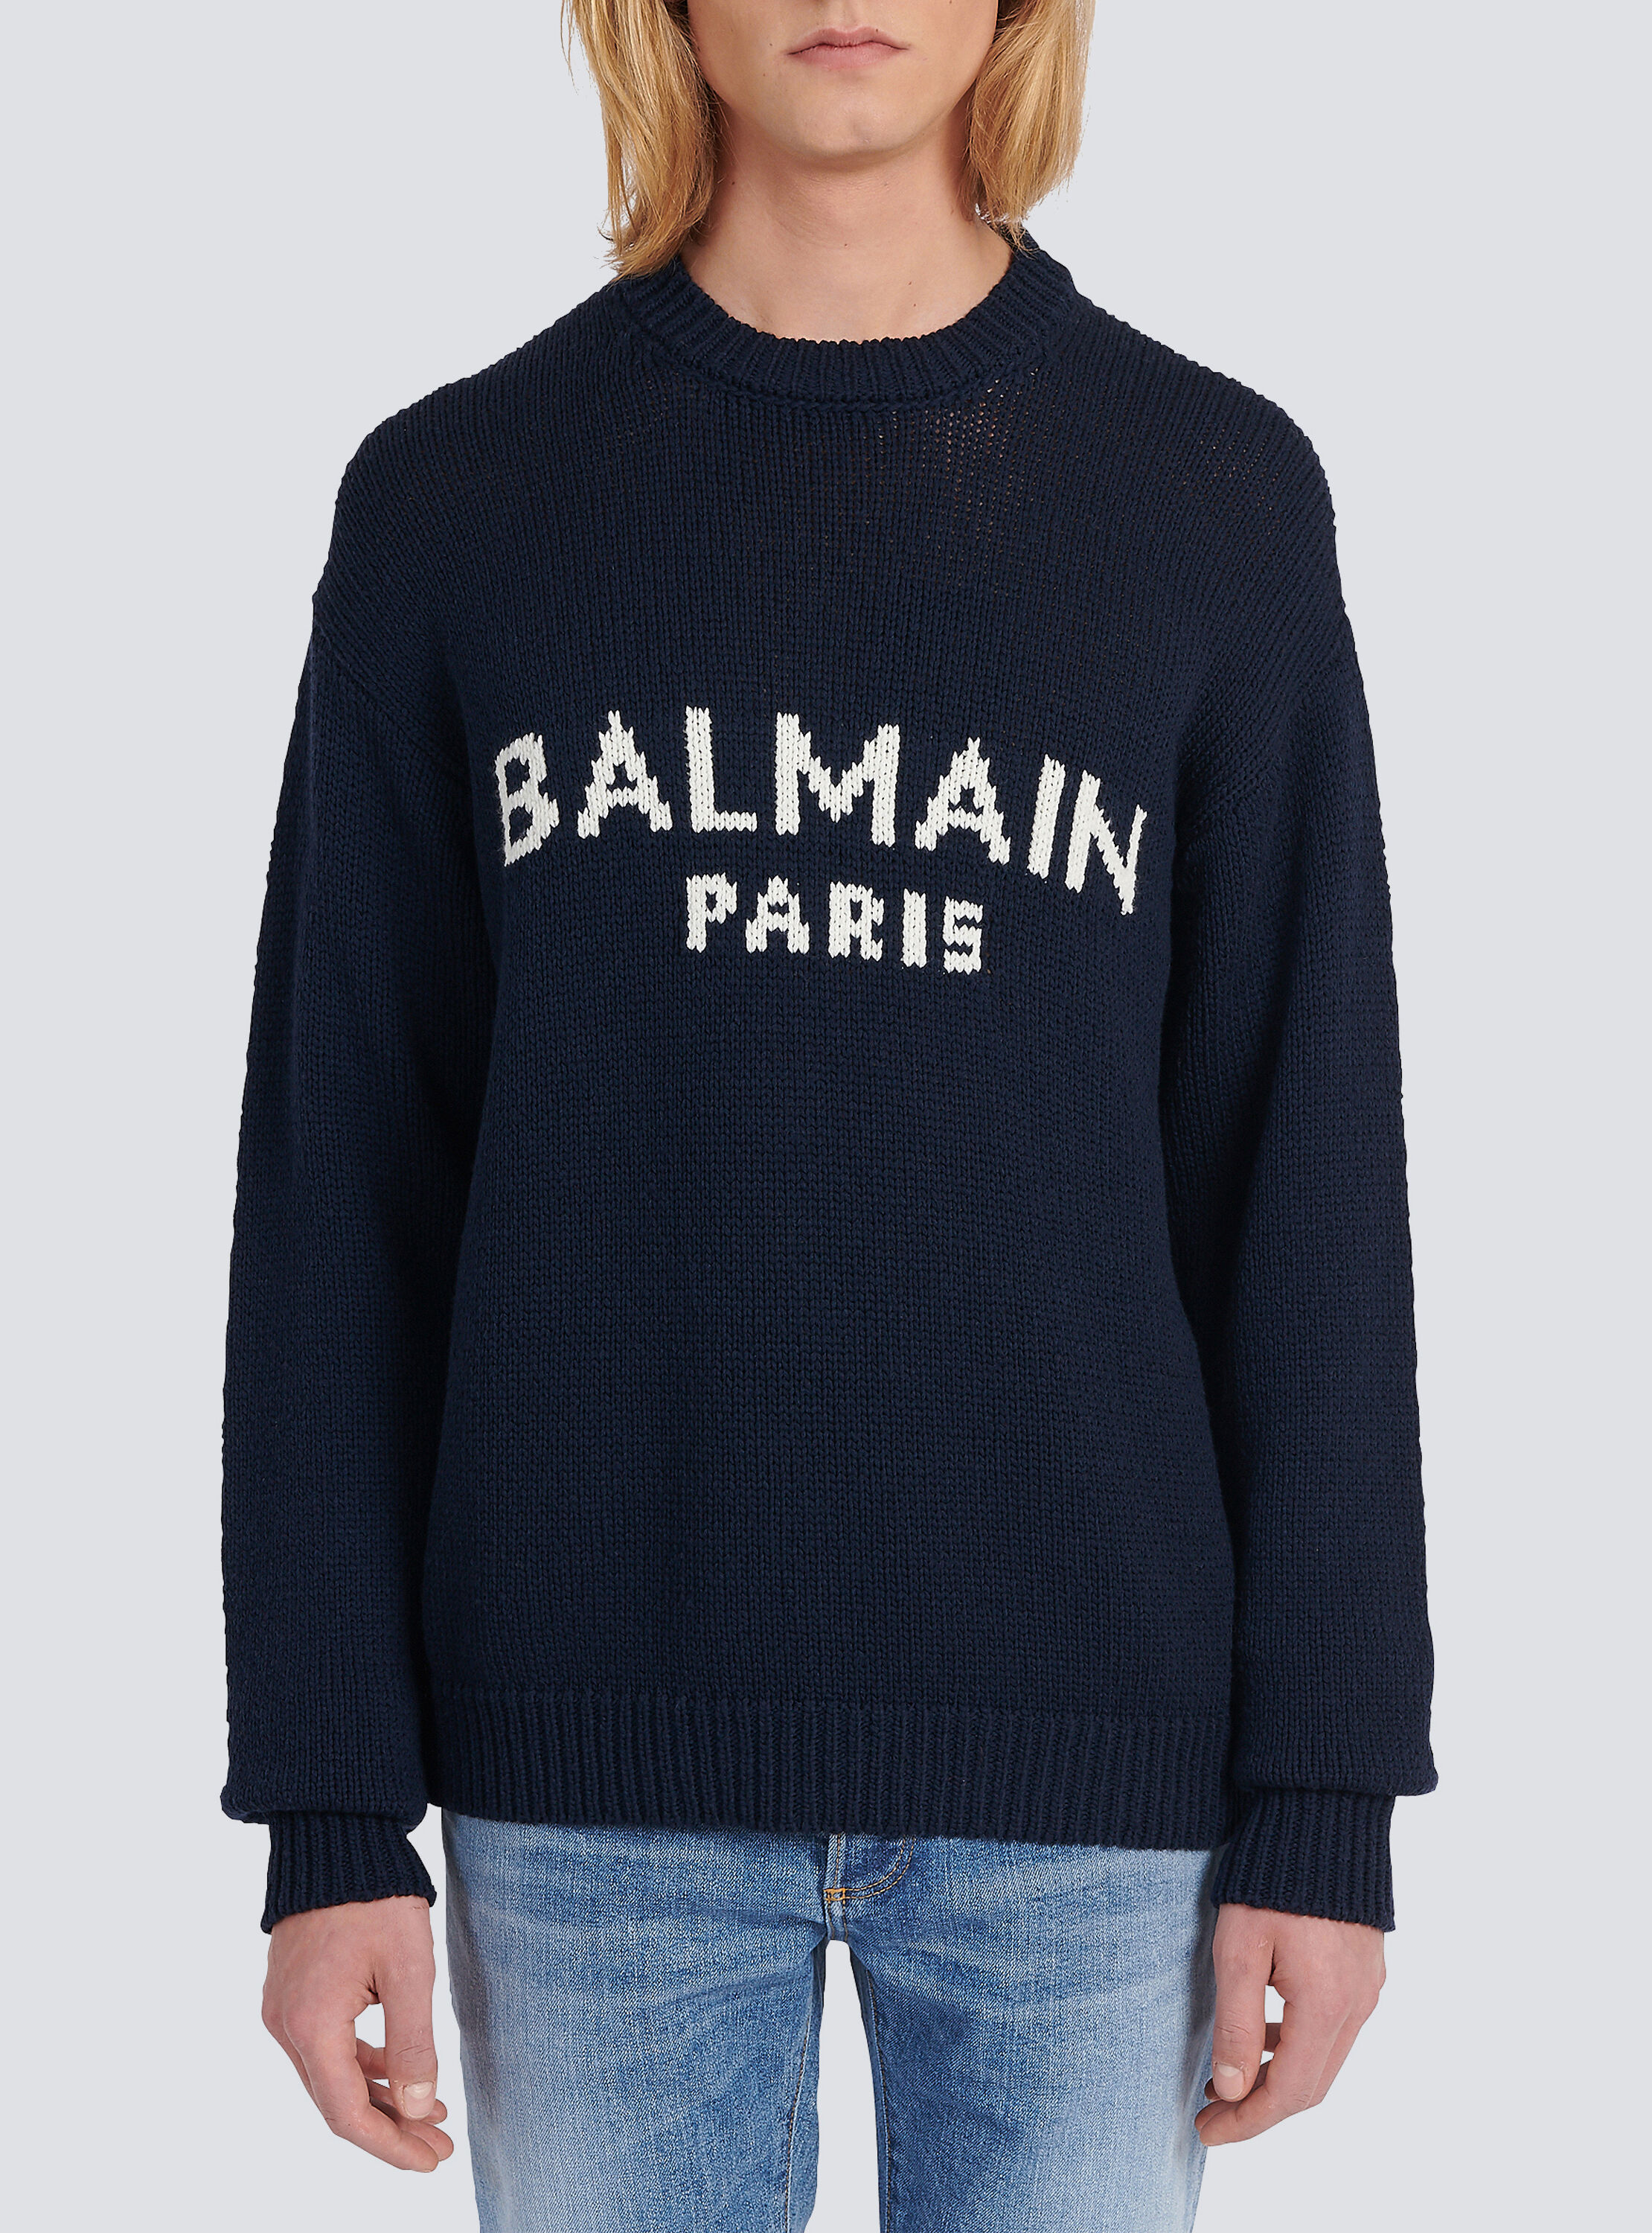 Designer Knitwear For Men | BALMAIN